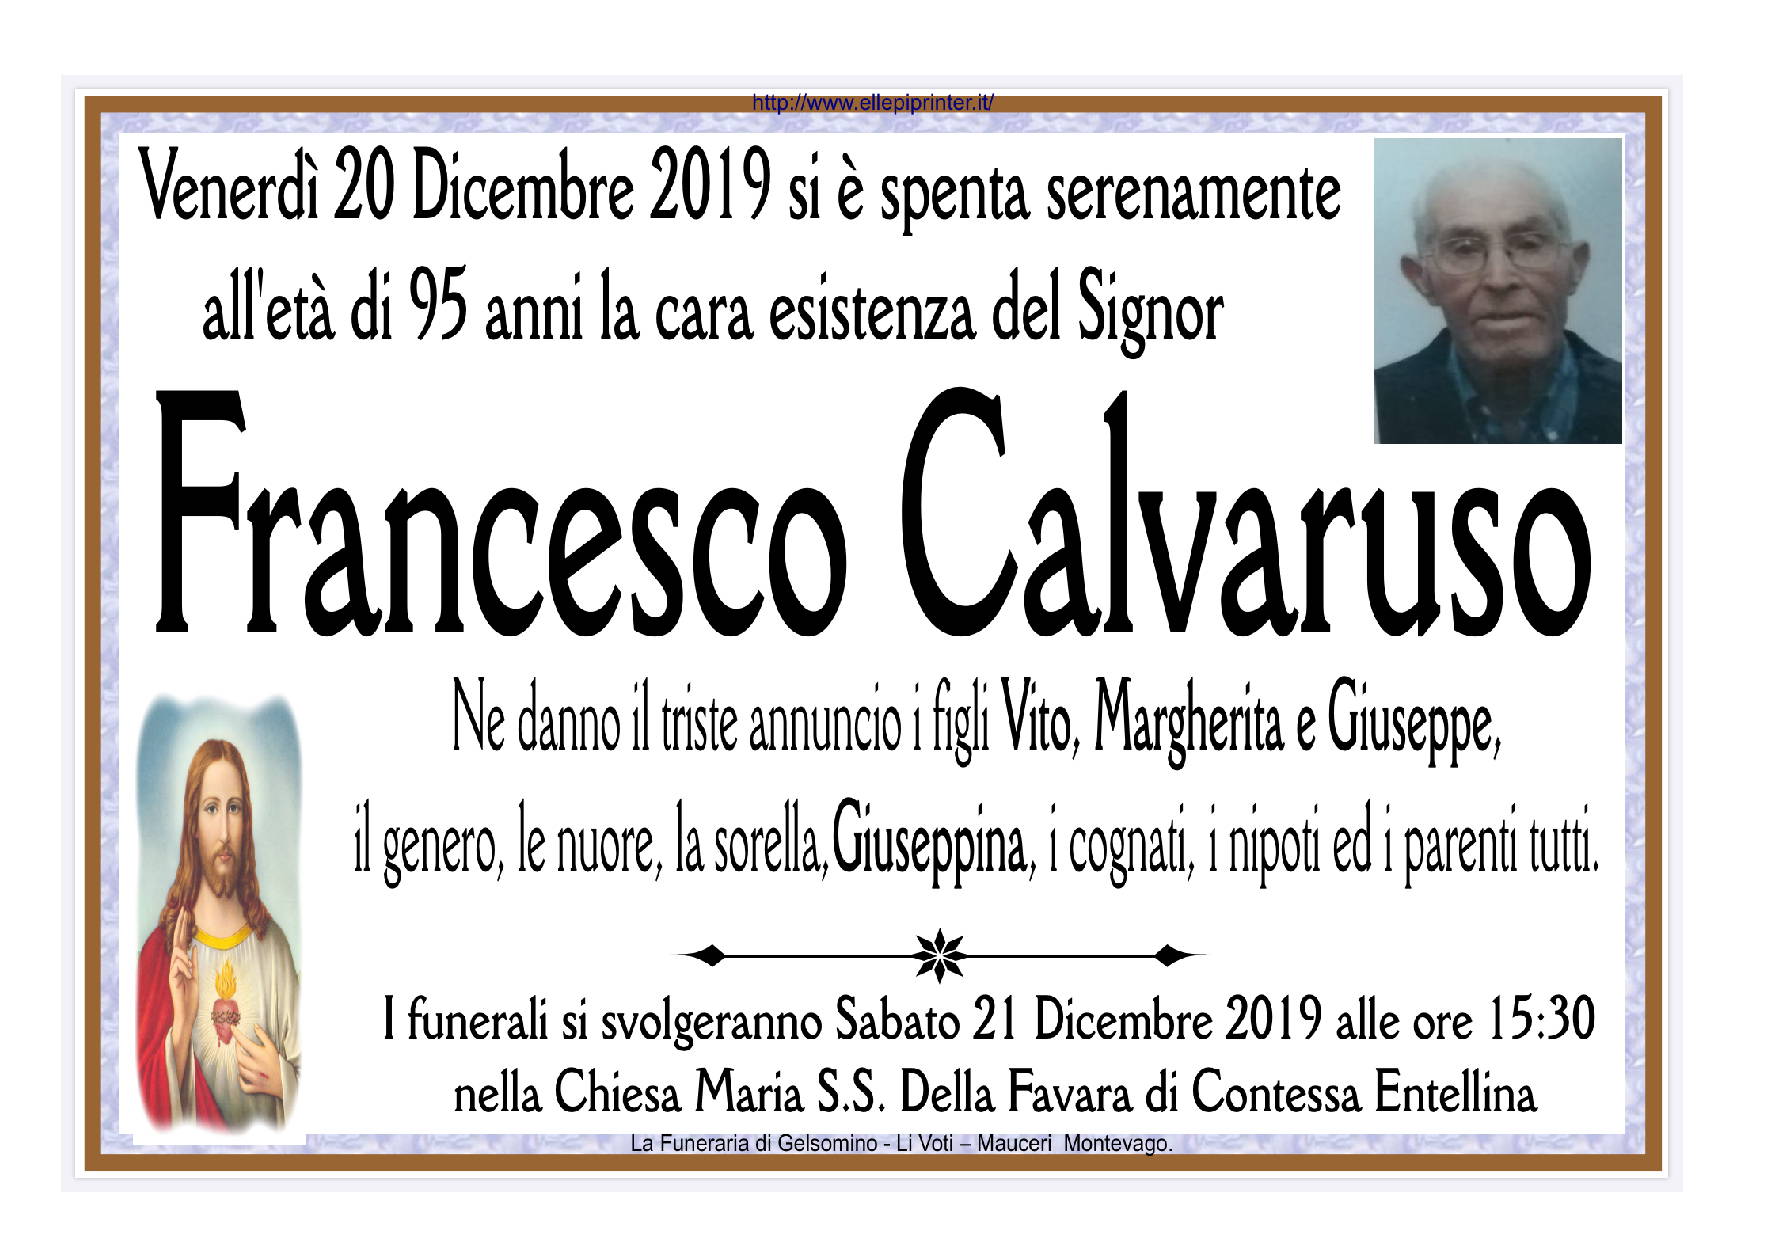 Francesco Calvaruso